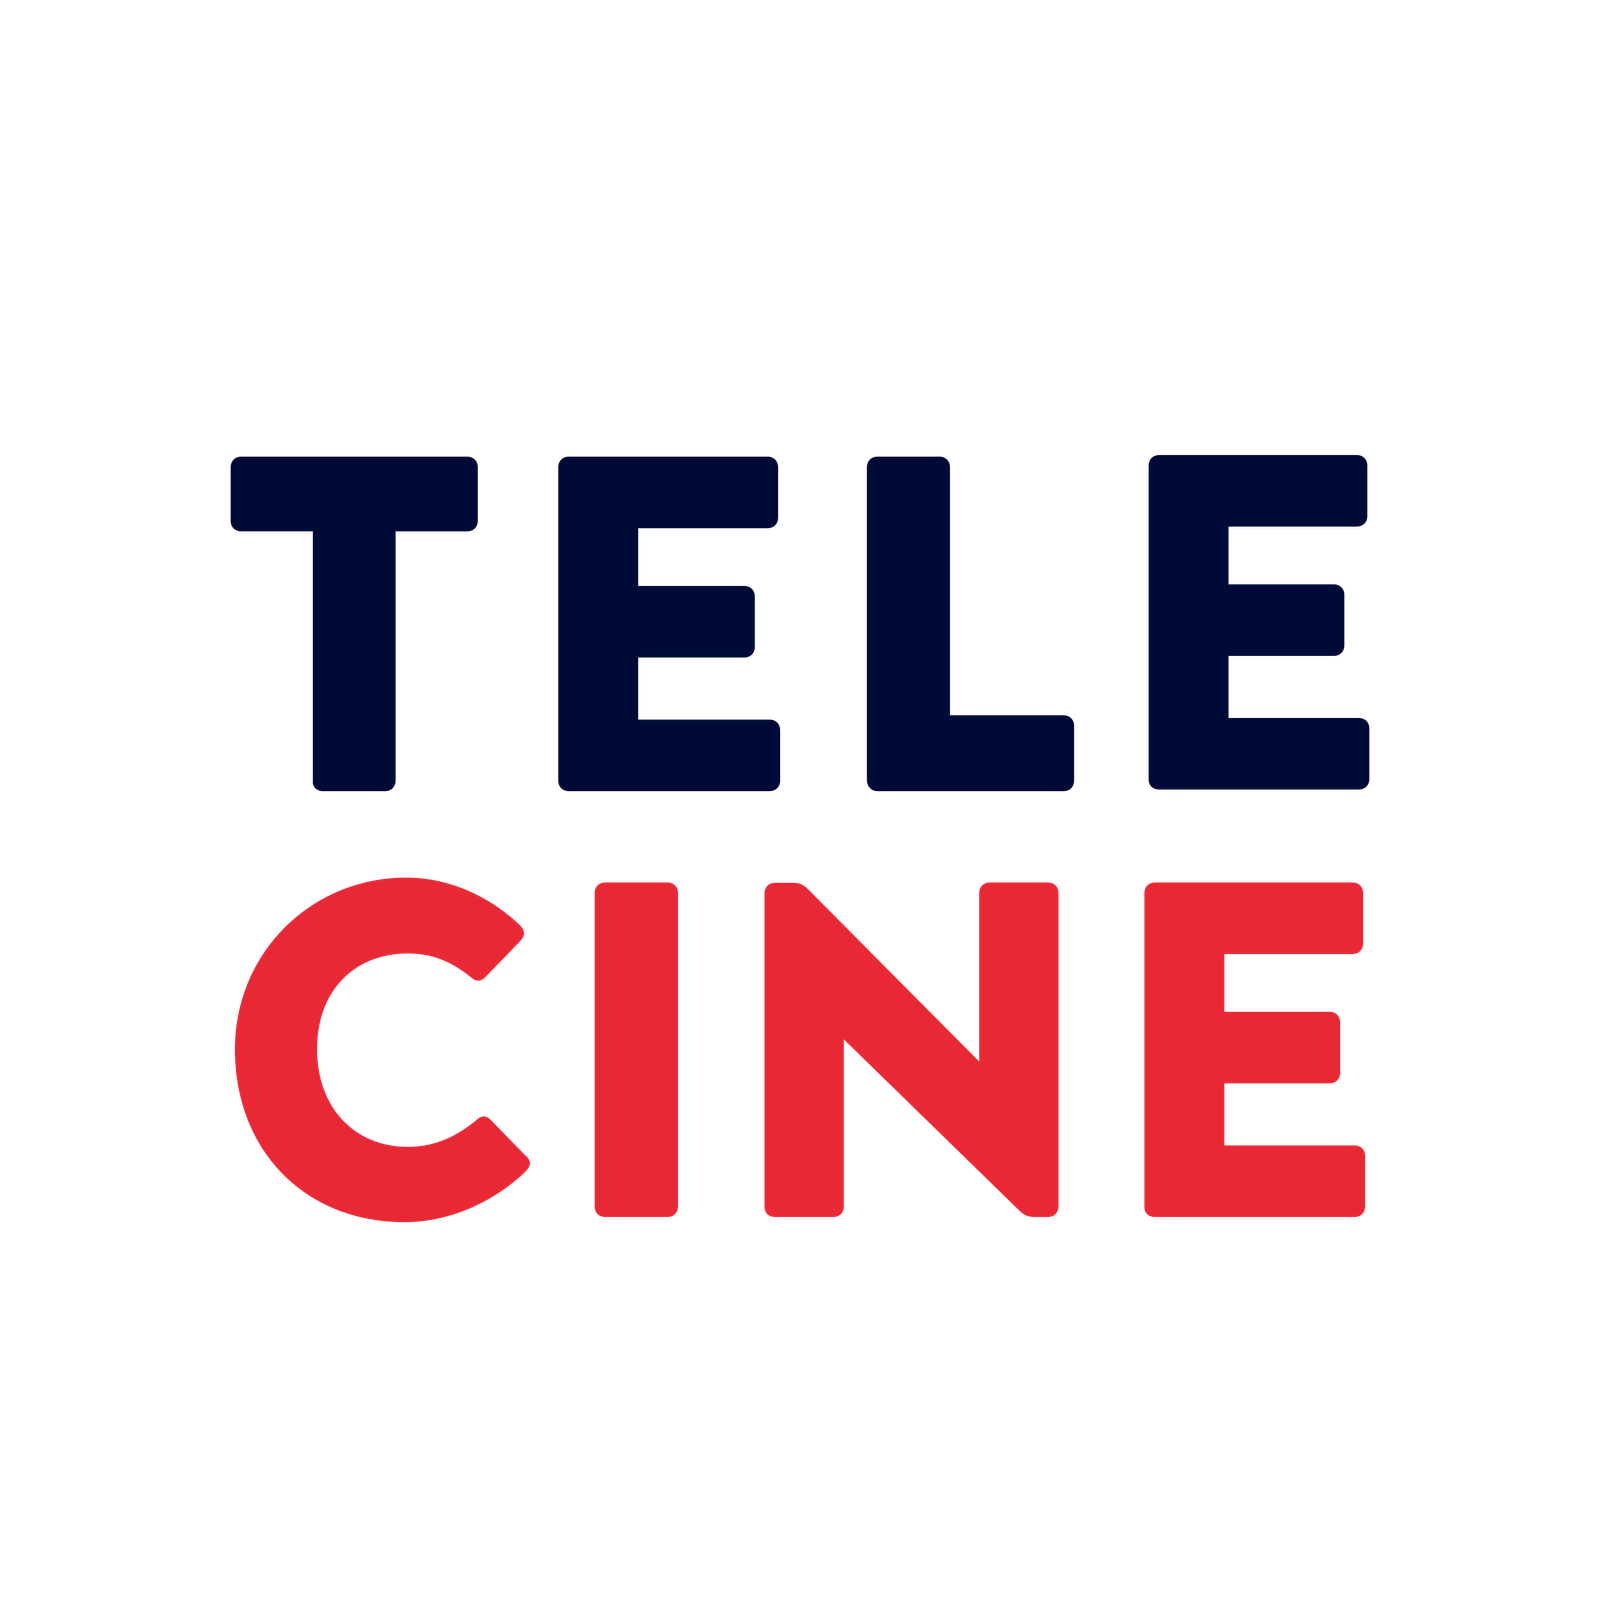 logo-telecine